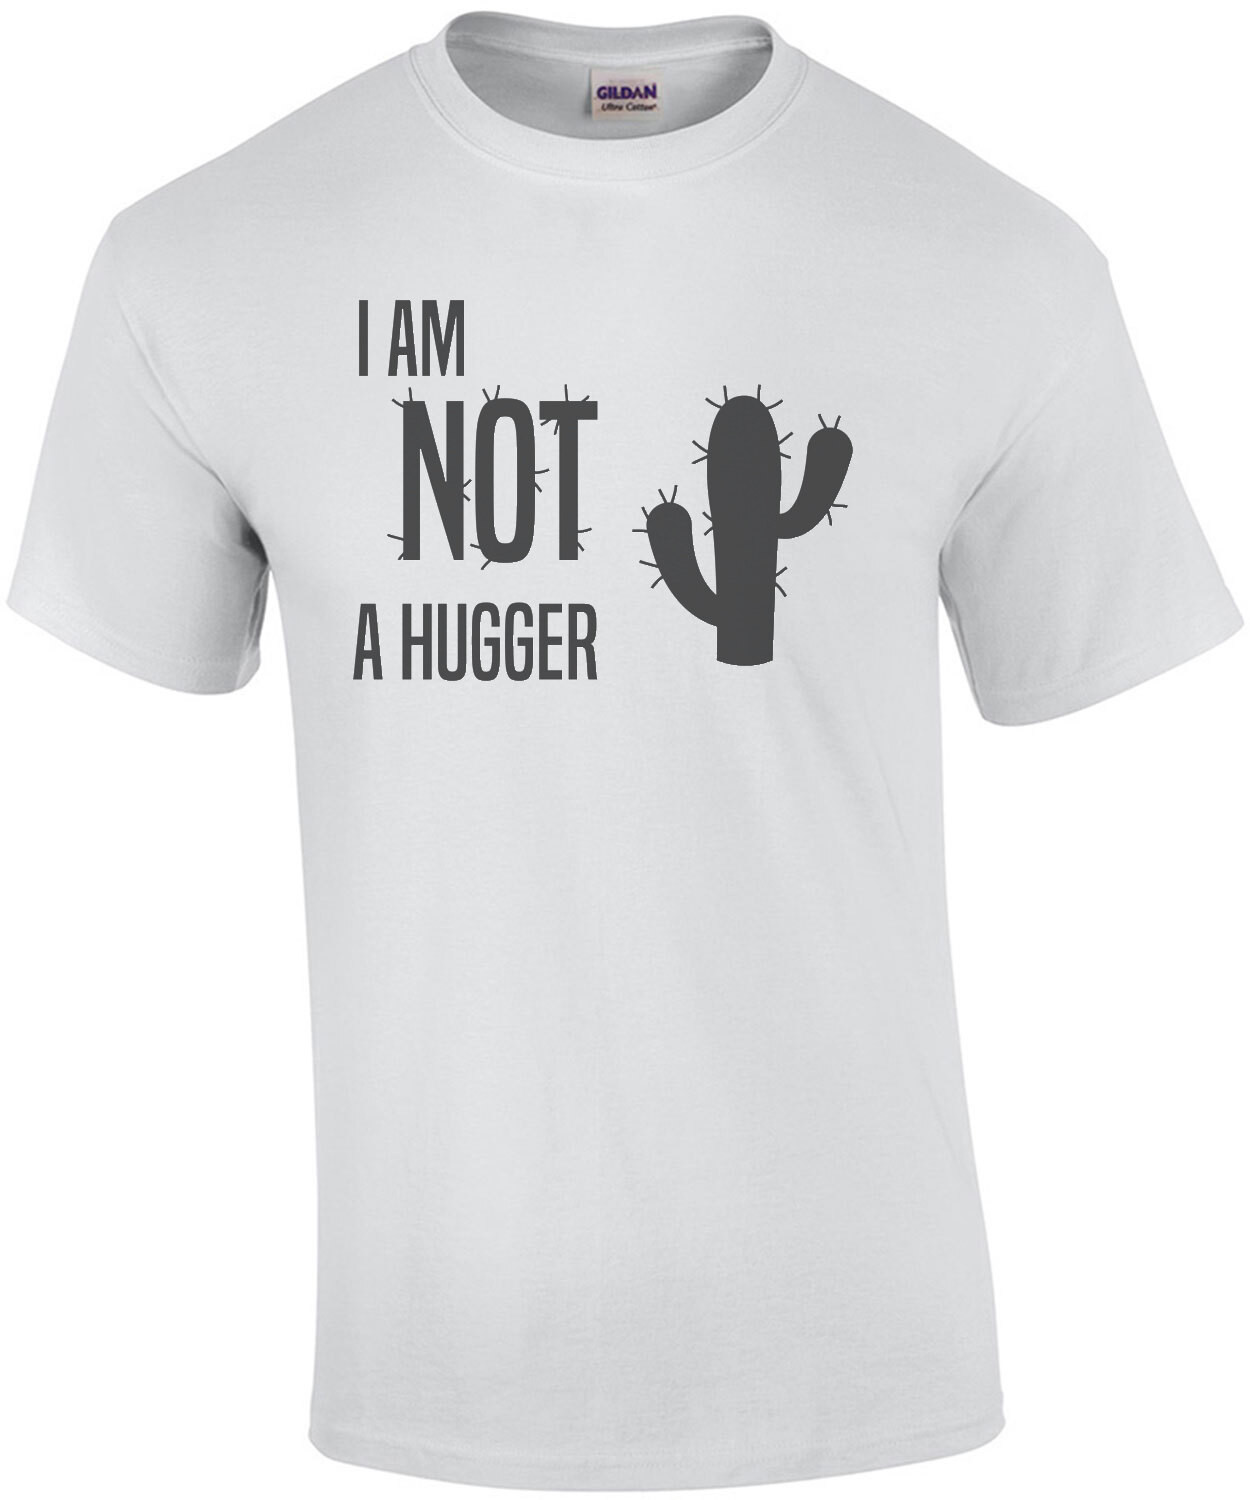 I am not a hugger - cactus - funny t-shirt